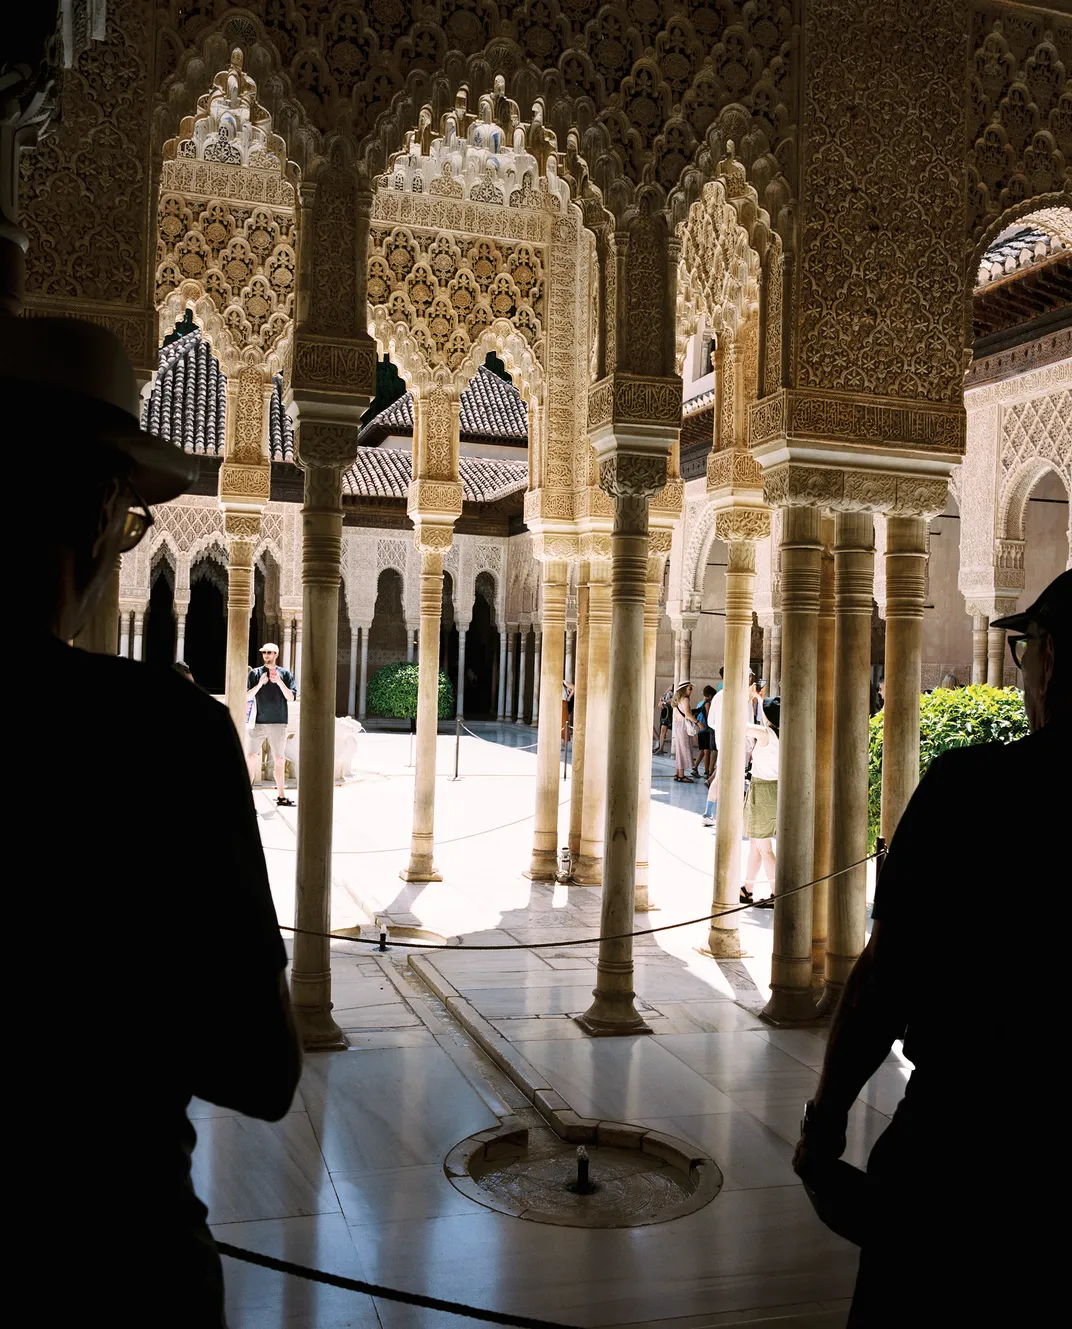 a palace courtyard with tourist amongst columns